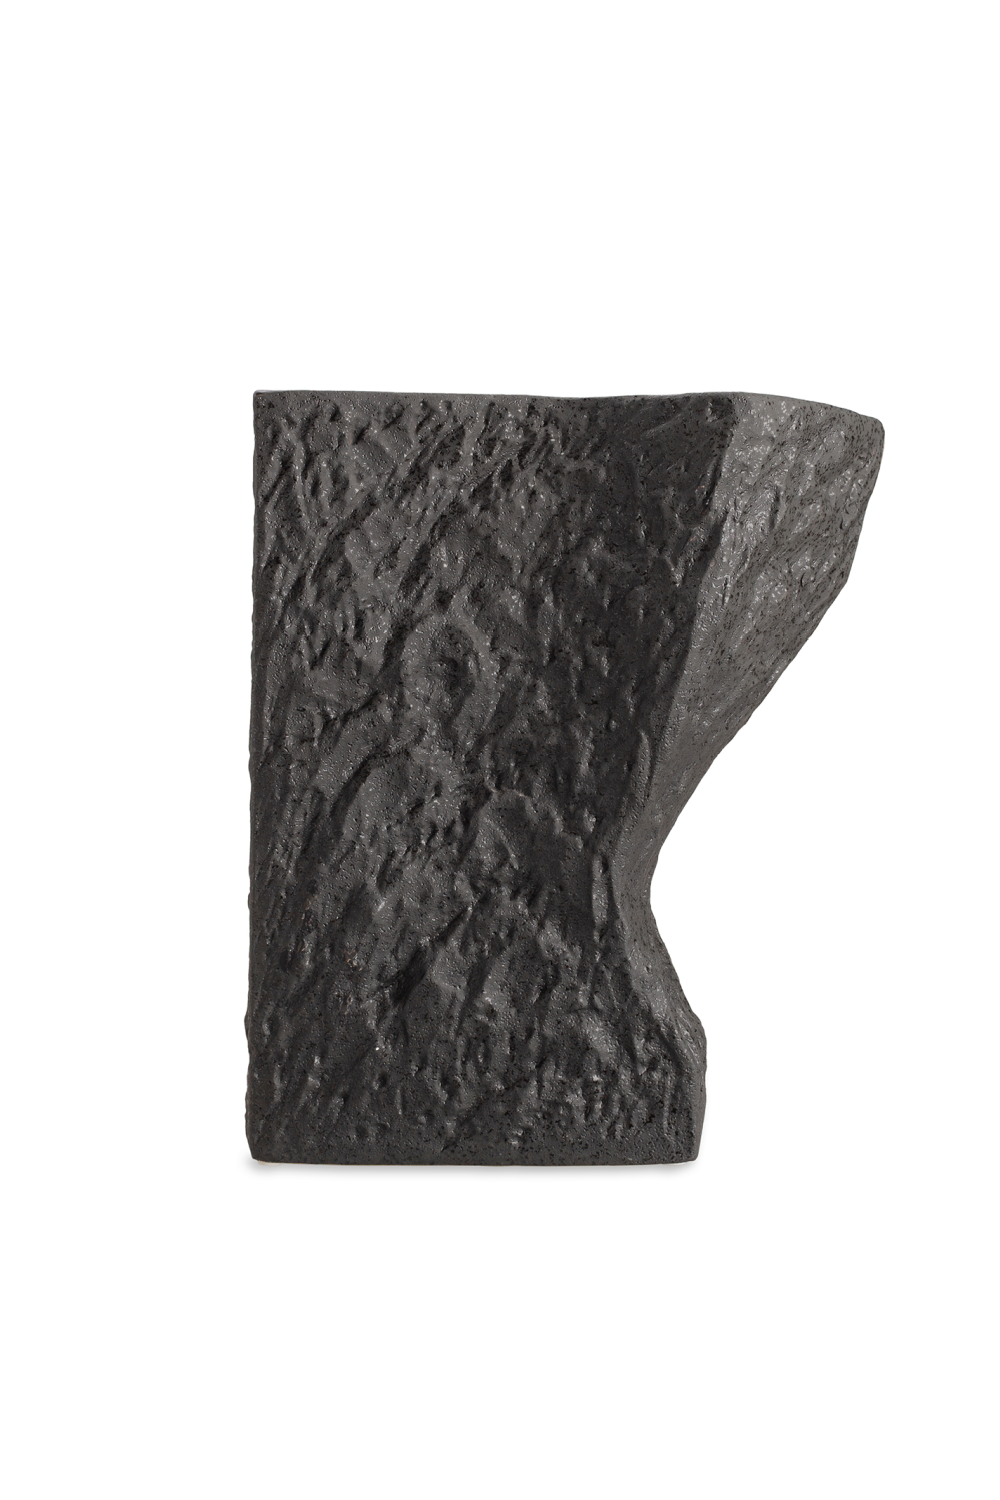 Textured Black Ceramic Vase | Liang & Eimil Quarry I | OROA.com